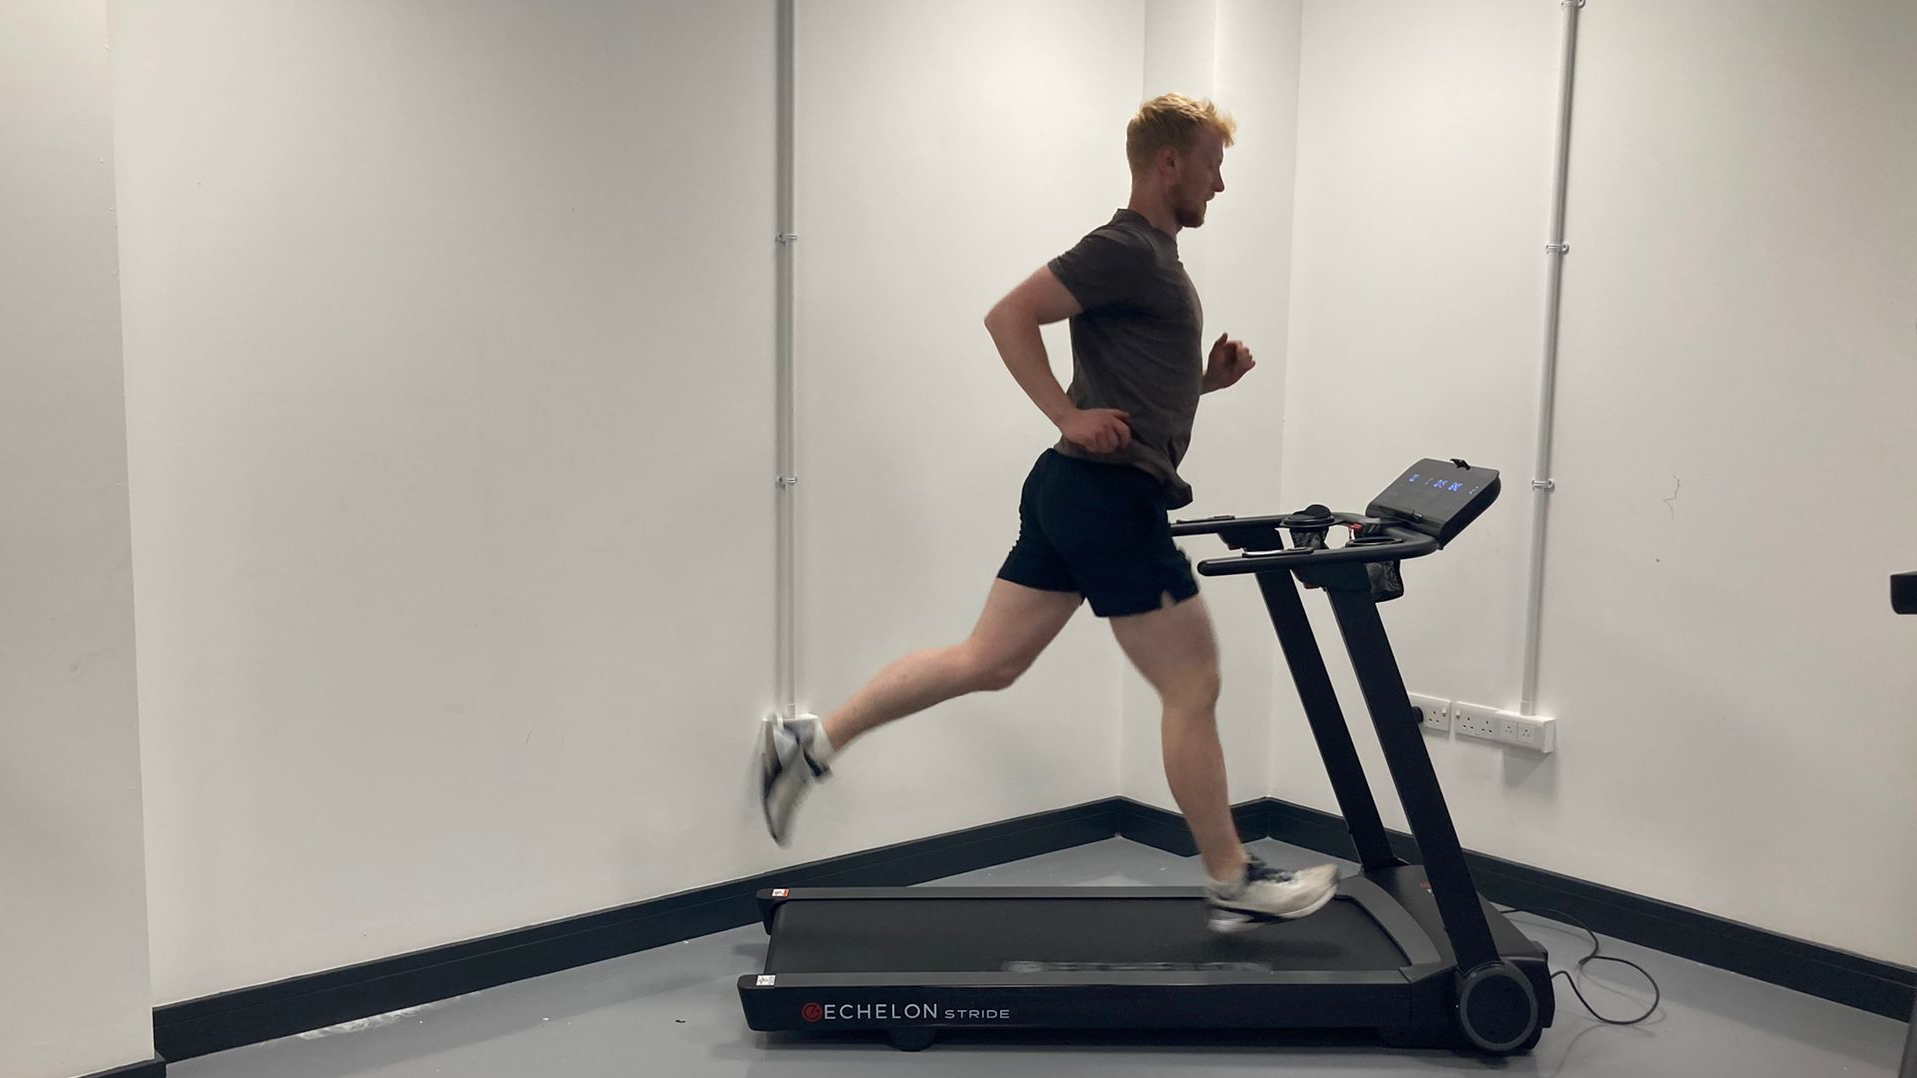 Echelon Stride treadmill being used